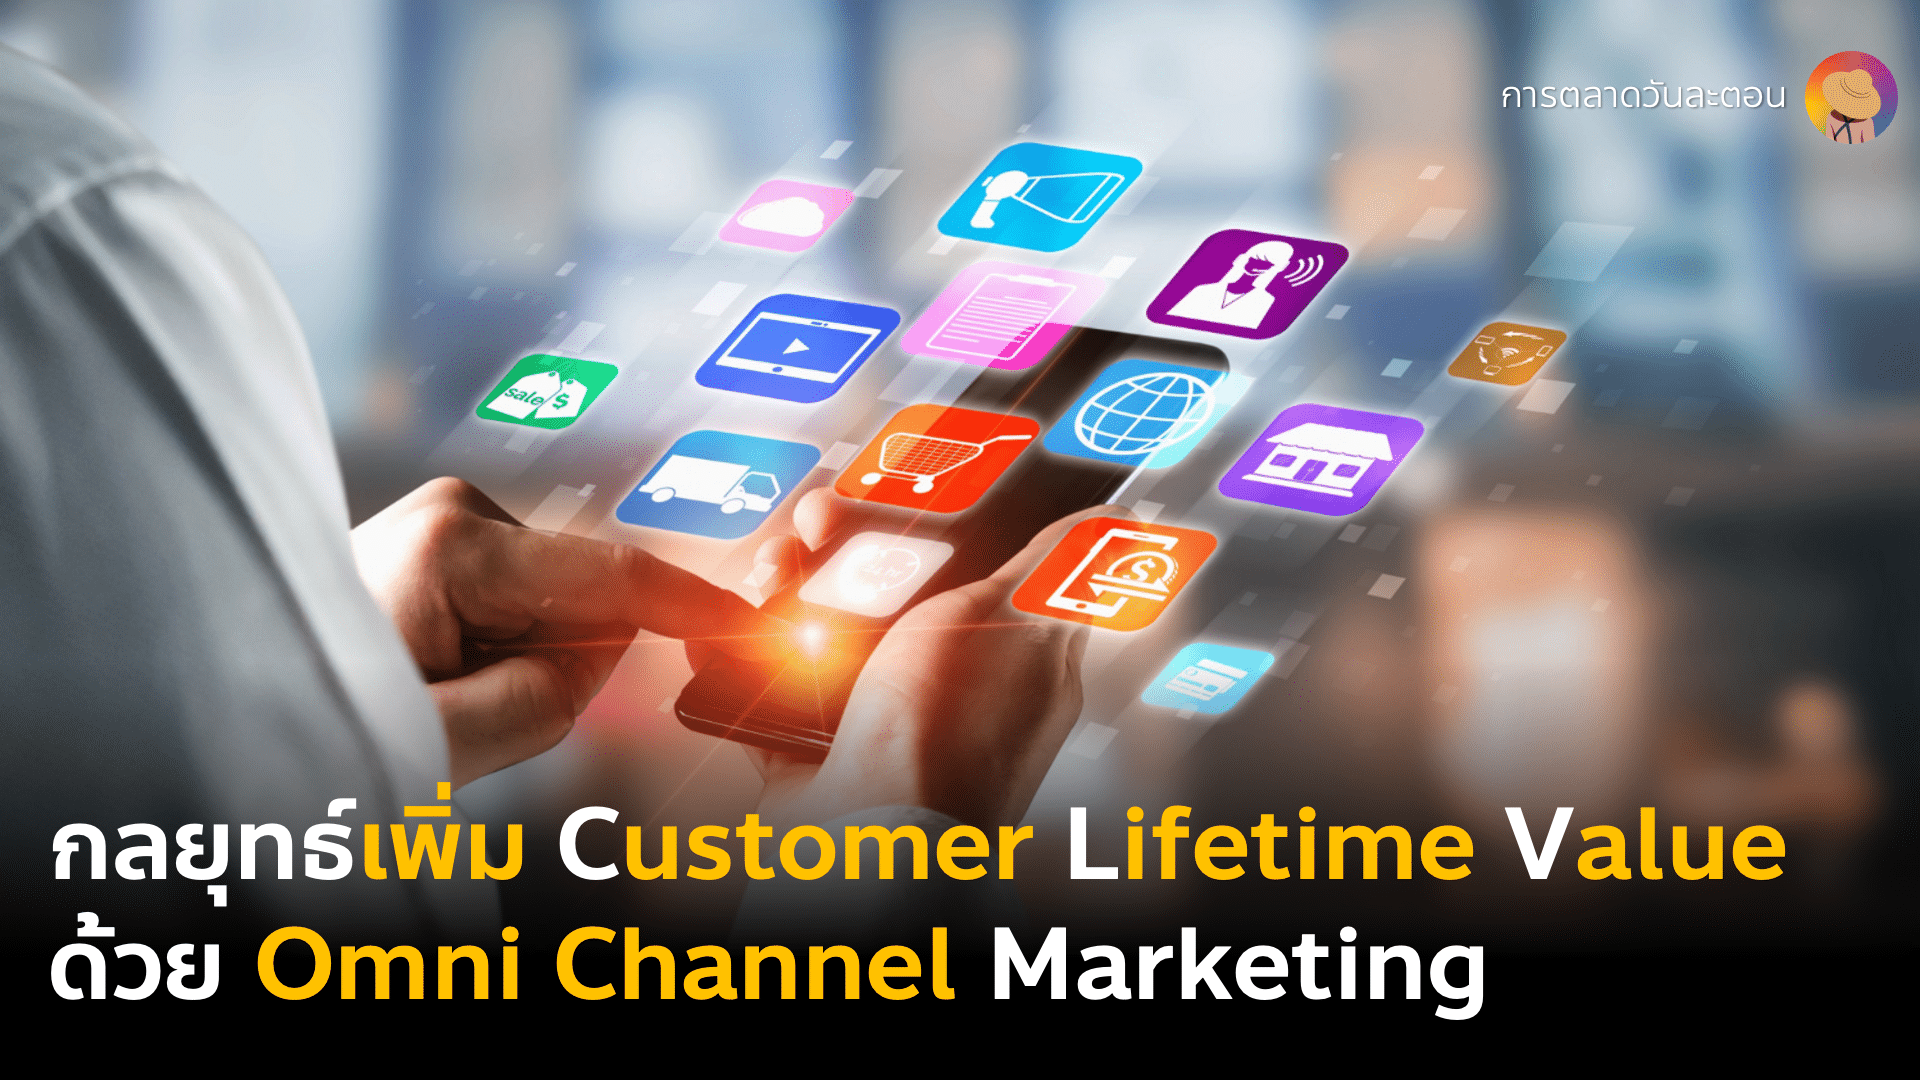 Omni Channel Marketing ดี Customer Lifetime Value CLV ก็สูงตาม